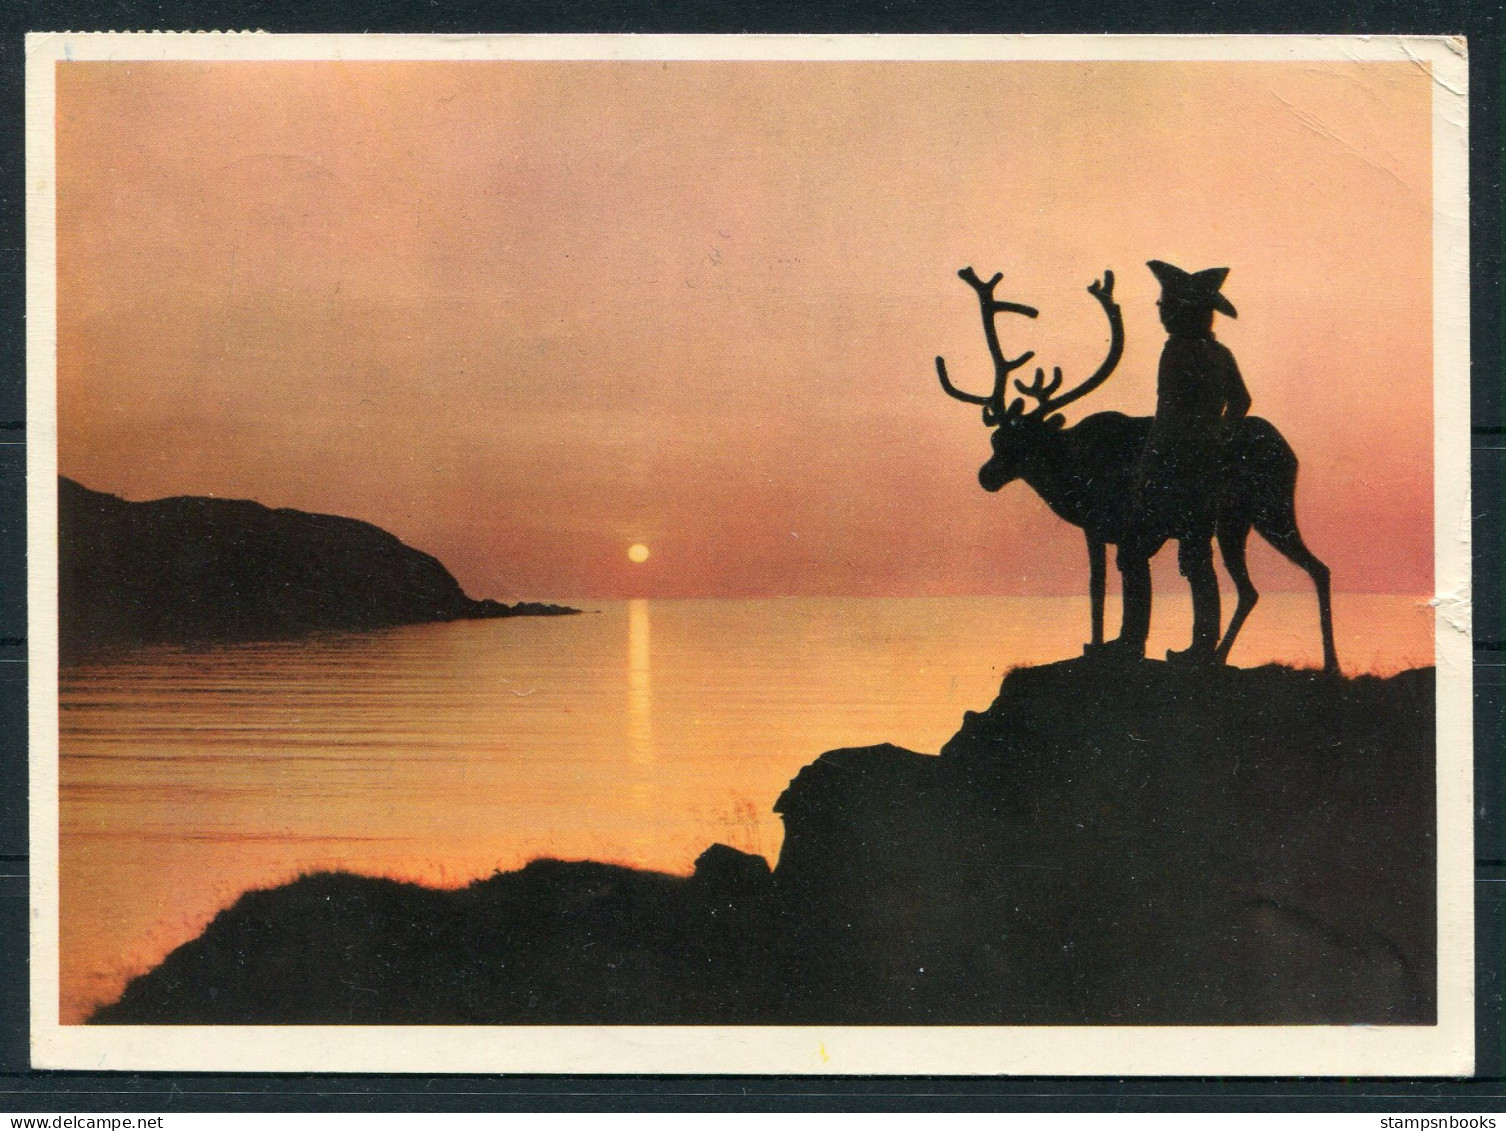 1960 Norway Arctic Circle, Polarsirkelen Postcard - Holland. Nordkap 35ore + Svalbard Jan Mayen I.G.Y. Polar Franking - Storia Postale